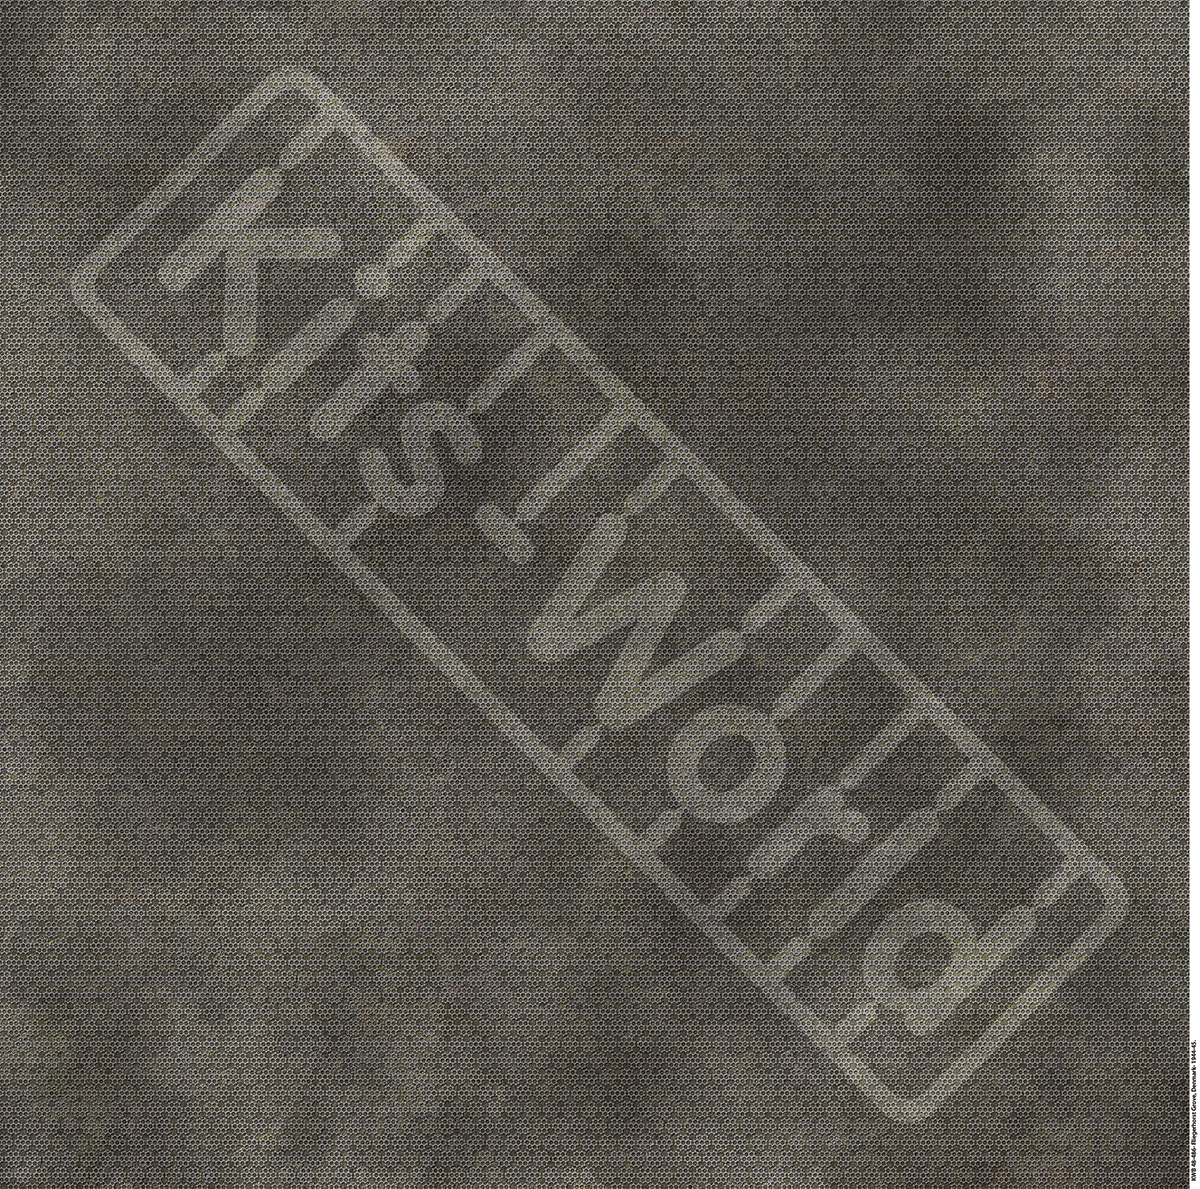 Kitsworld Diorama Adhesive Base 1:48th scale - Fliegerhorst Grove KWB 48-486 Fliegerhorst Grove GPS- 56º19’00.29” N 9º04’05.59” E (General location) 